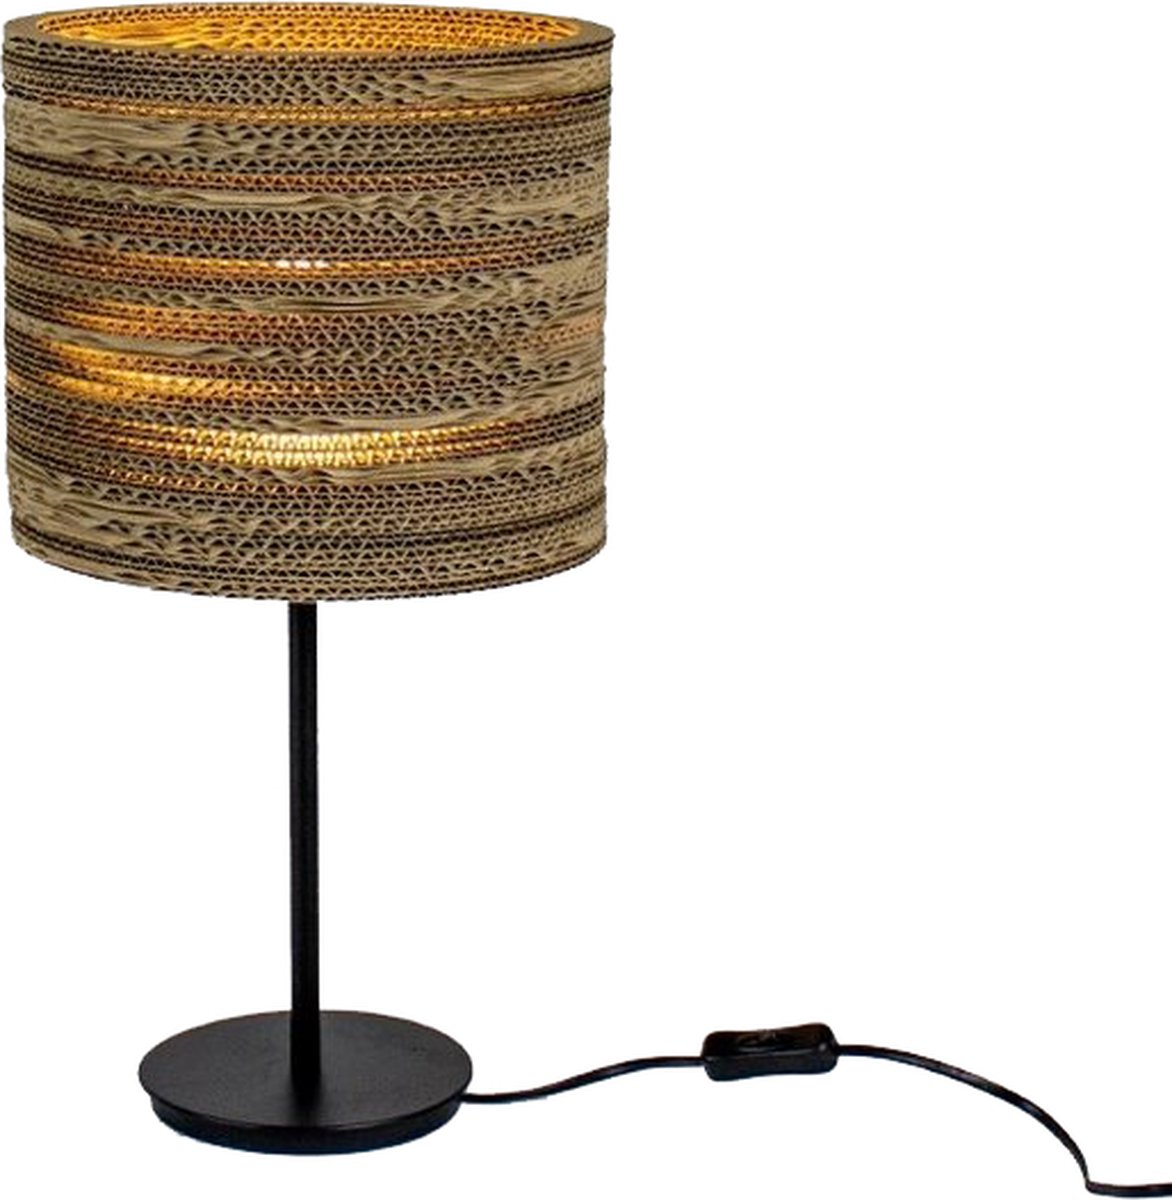 Kartonnen Interlaken Tafellamp - Tafellamp van karton - E14 fitting - 26x26x42 cm - Inclusief lampenvoet goud - KarTent